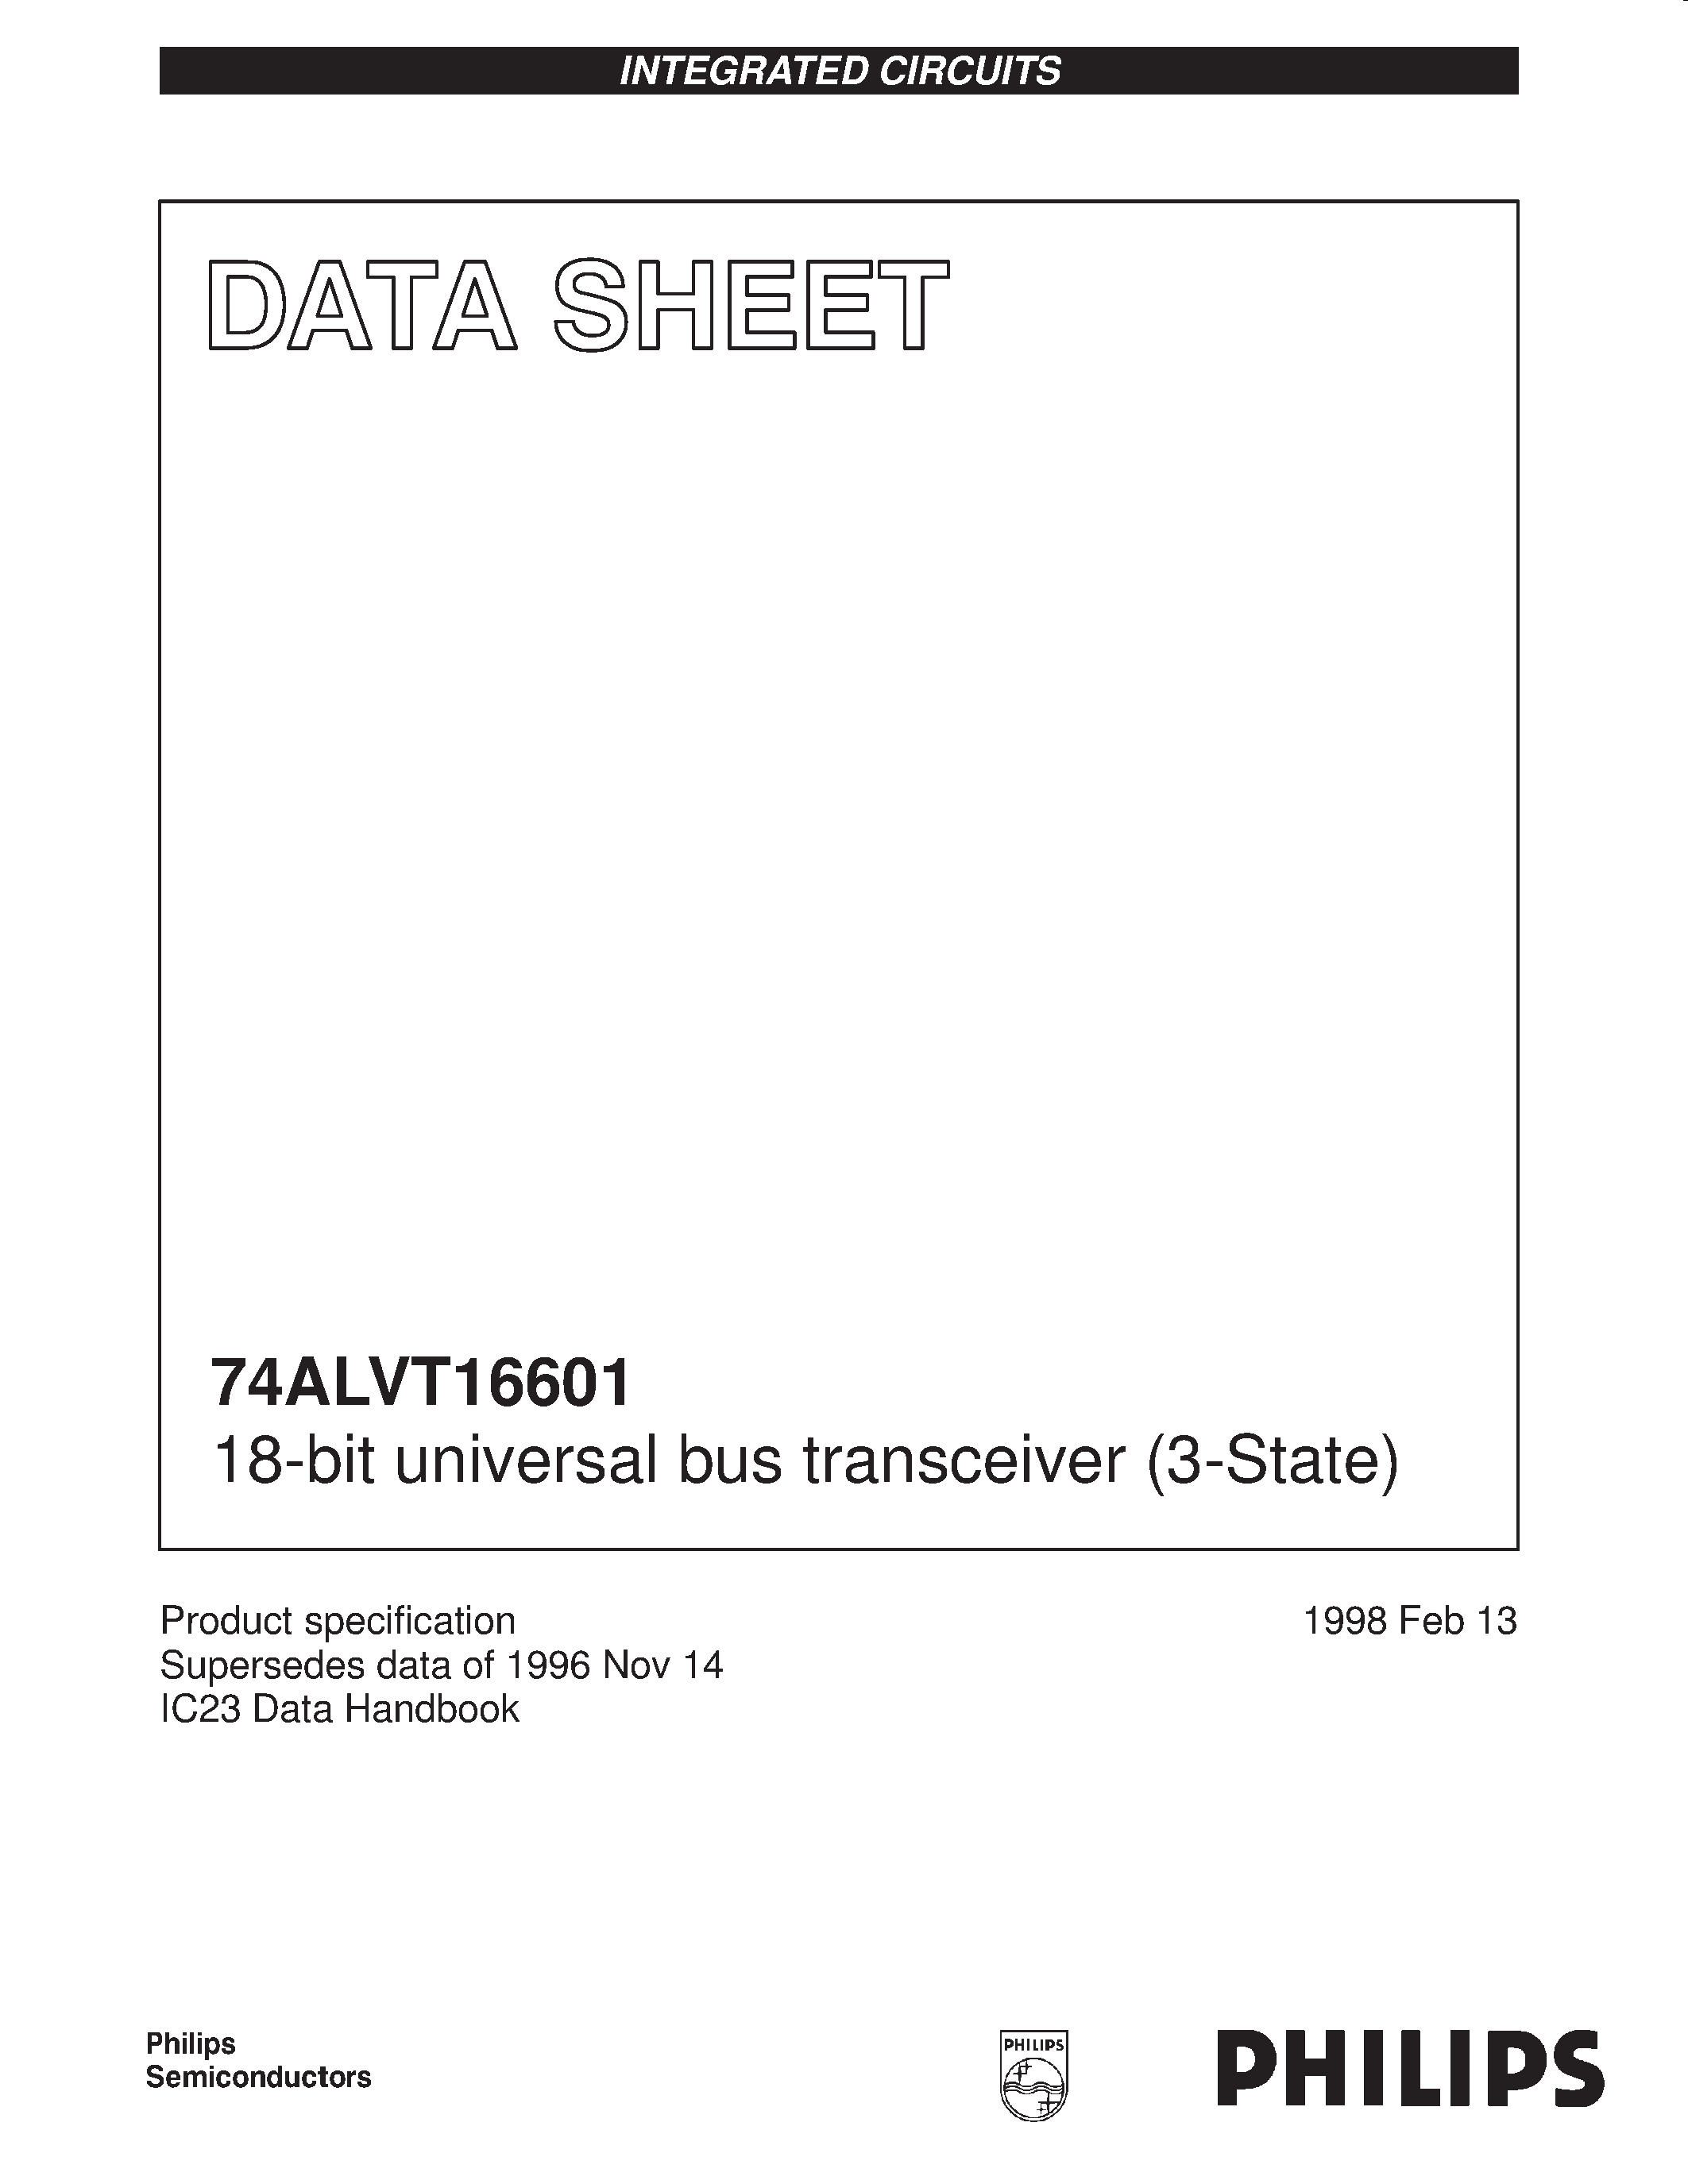 Datasheet 74ALVT16601DL - 18-bit universal bus transceiver 3-State page 1